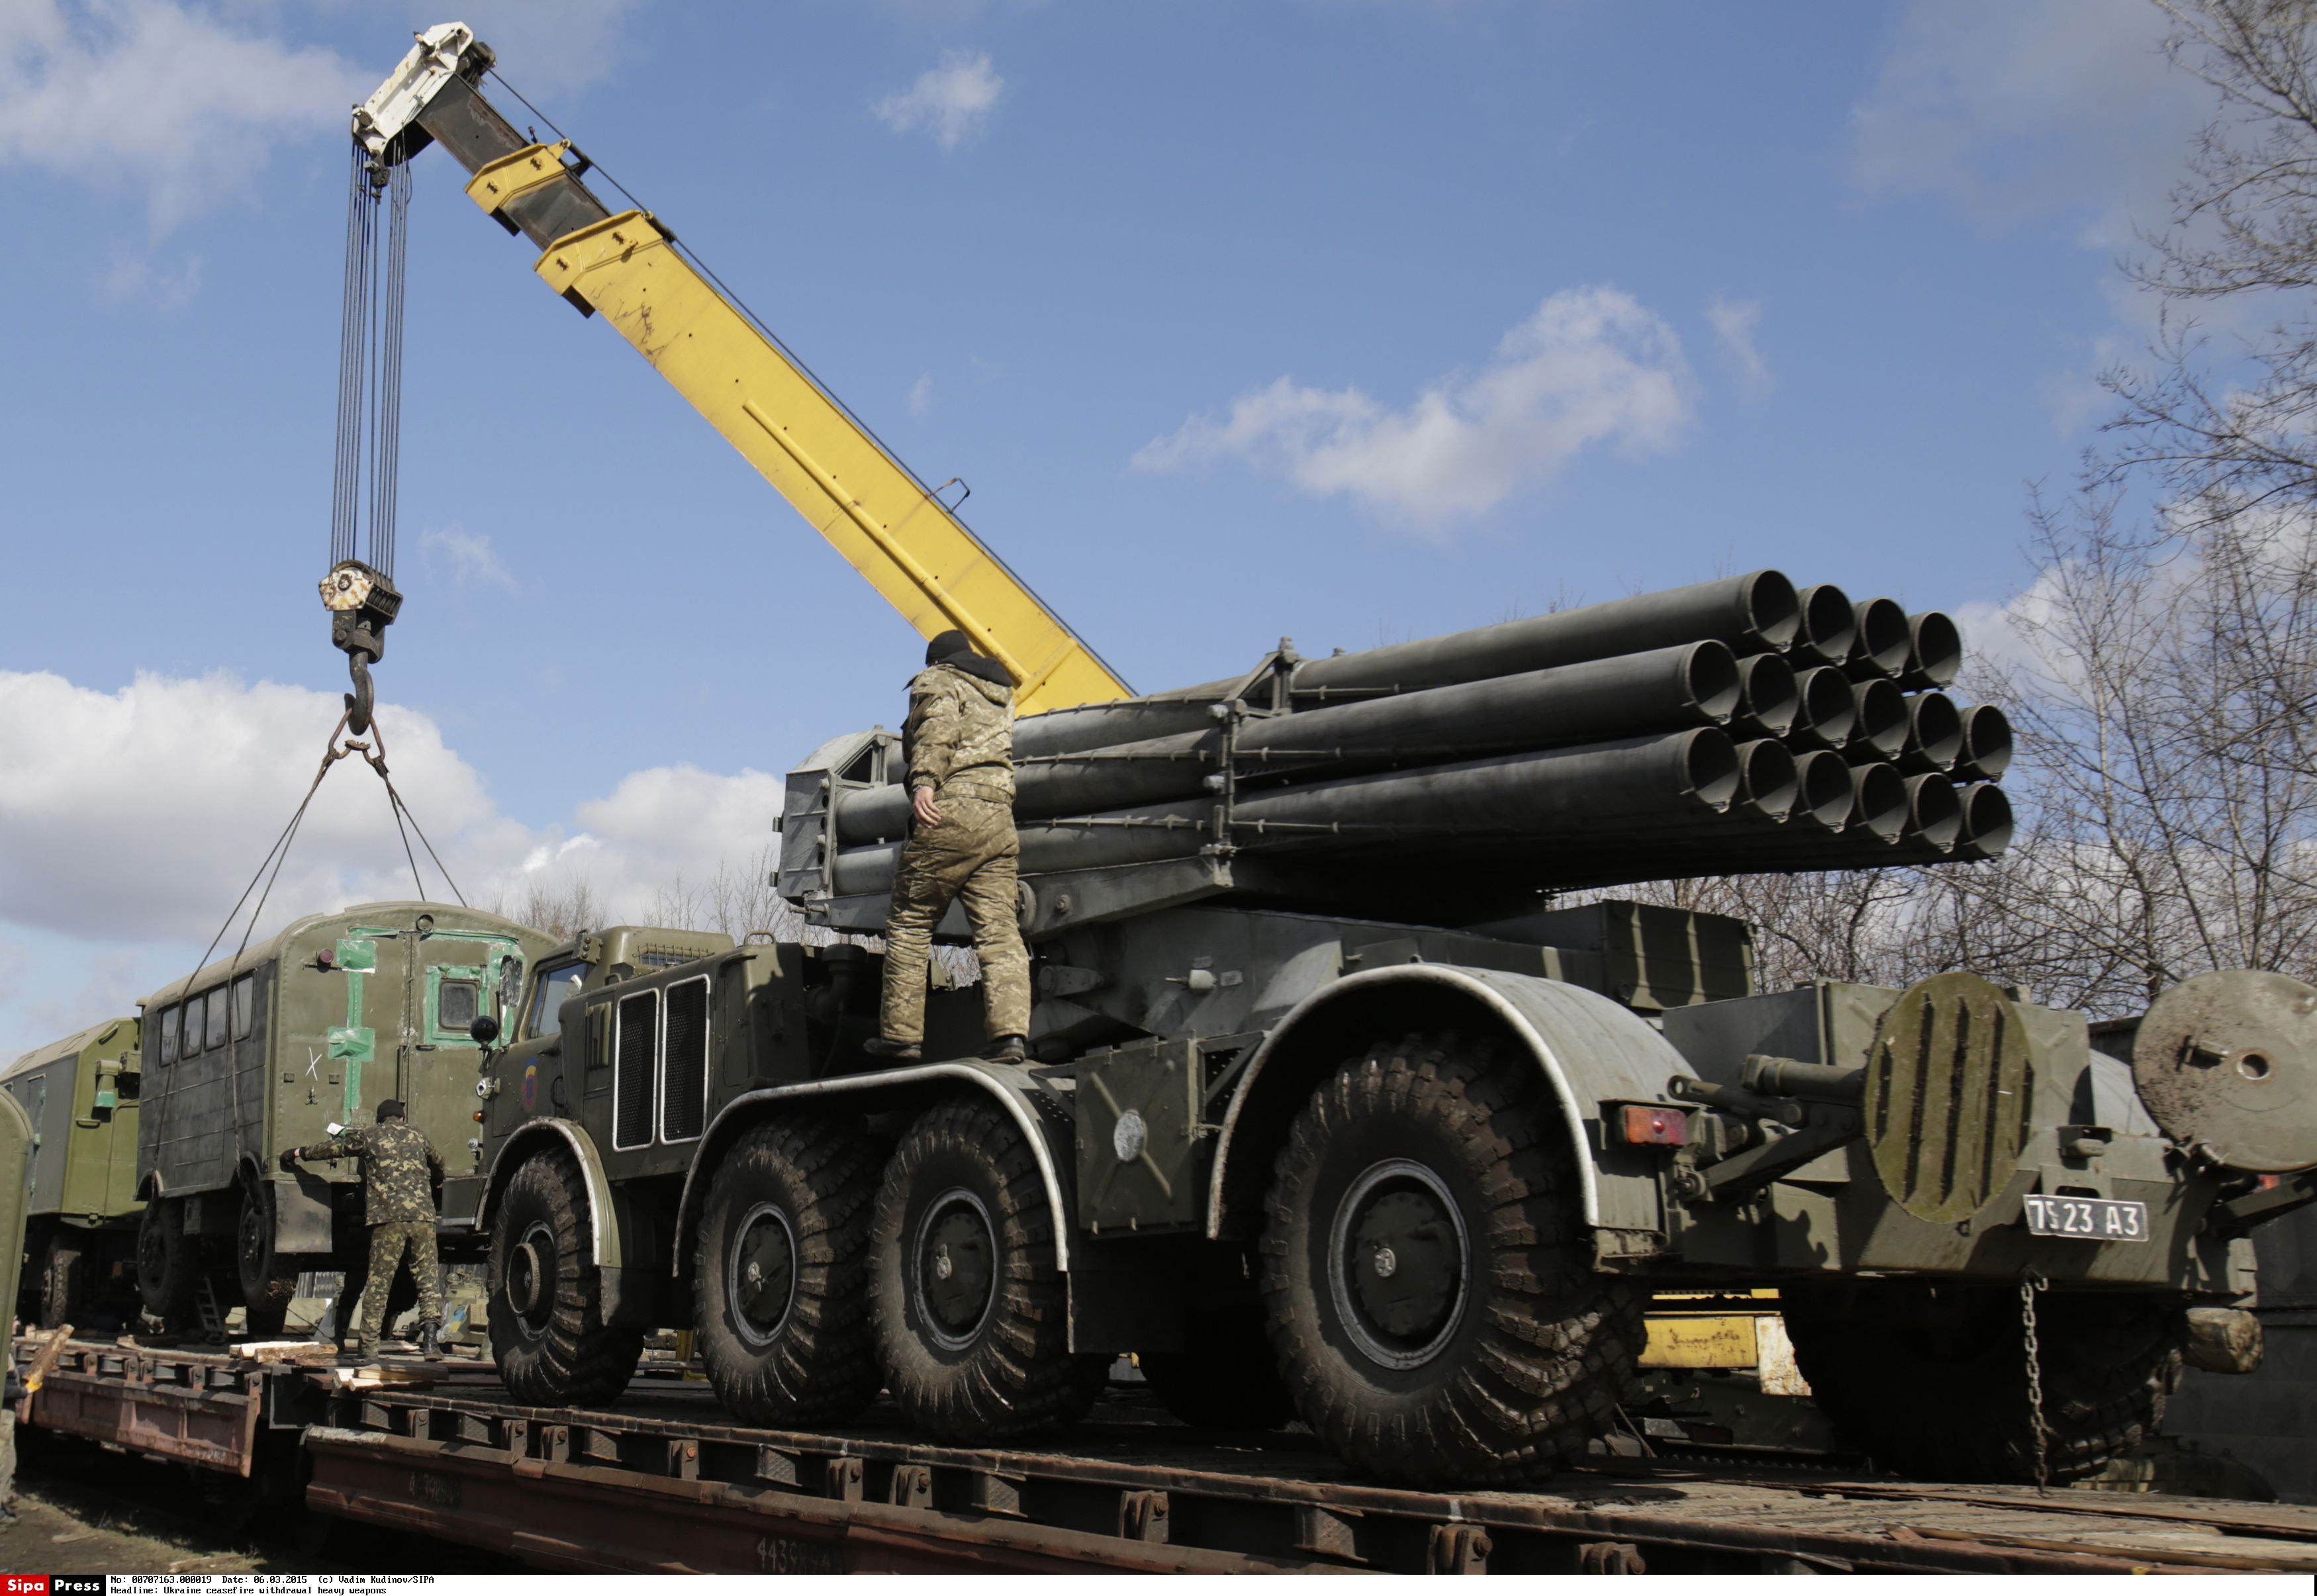 Ukrainian servicemen load a Uragan multiple rocket launcher system onto a cargo train